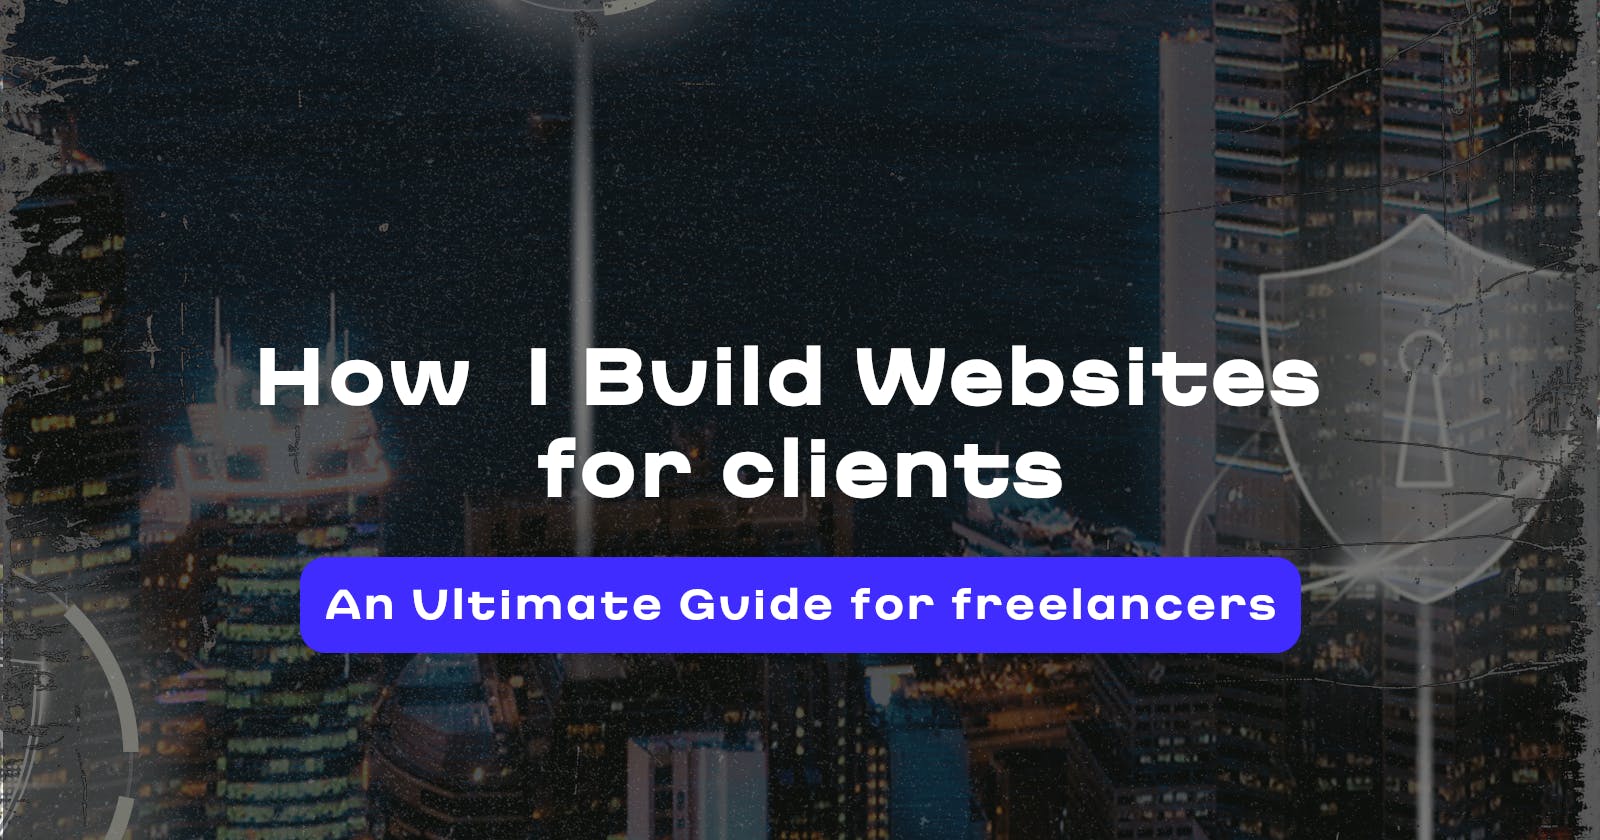 How do I build websites for clients?